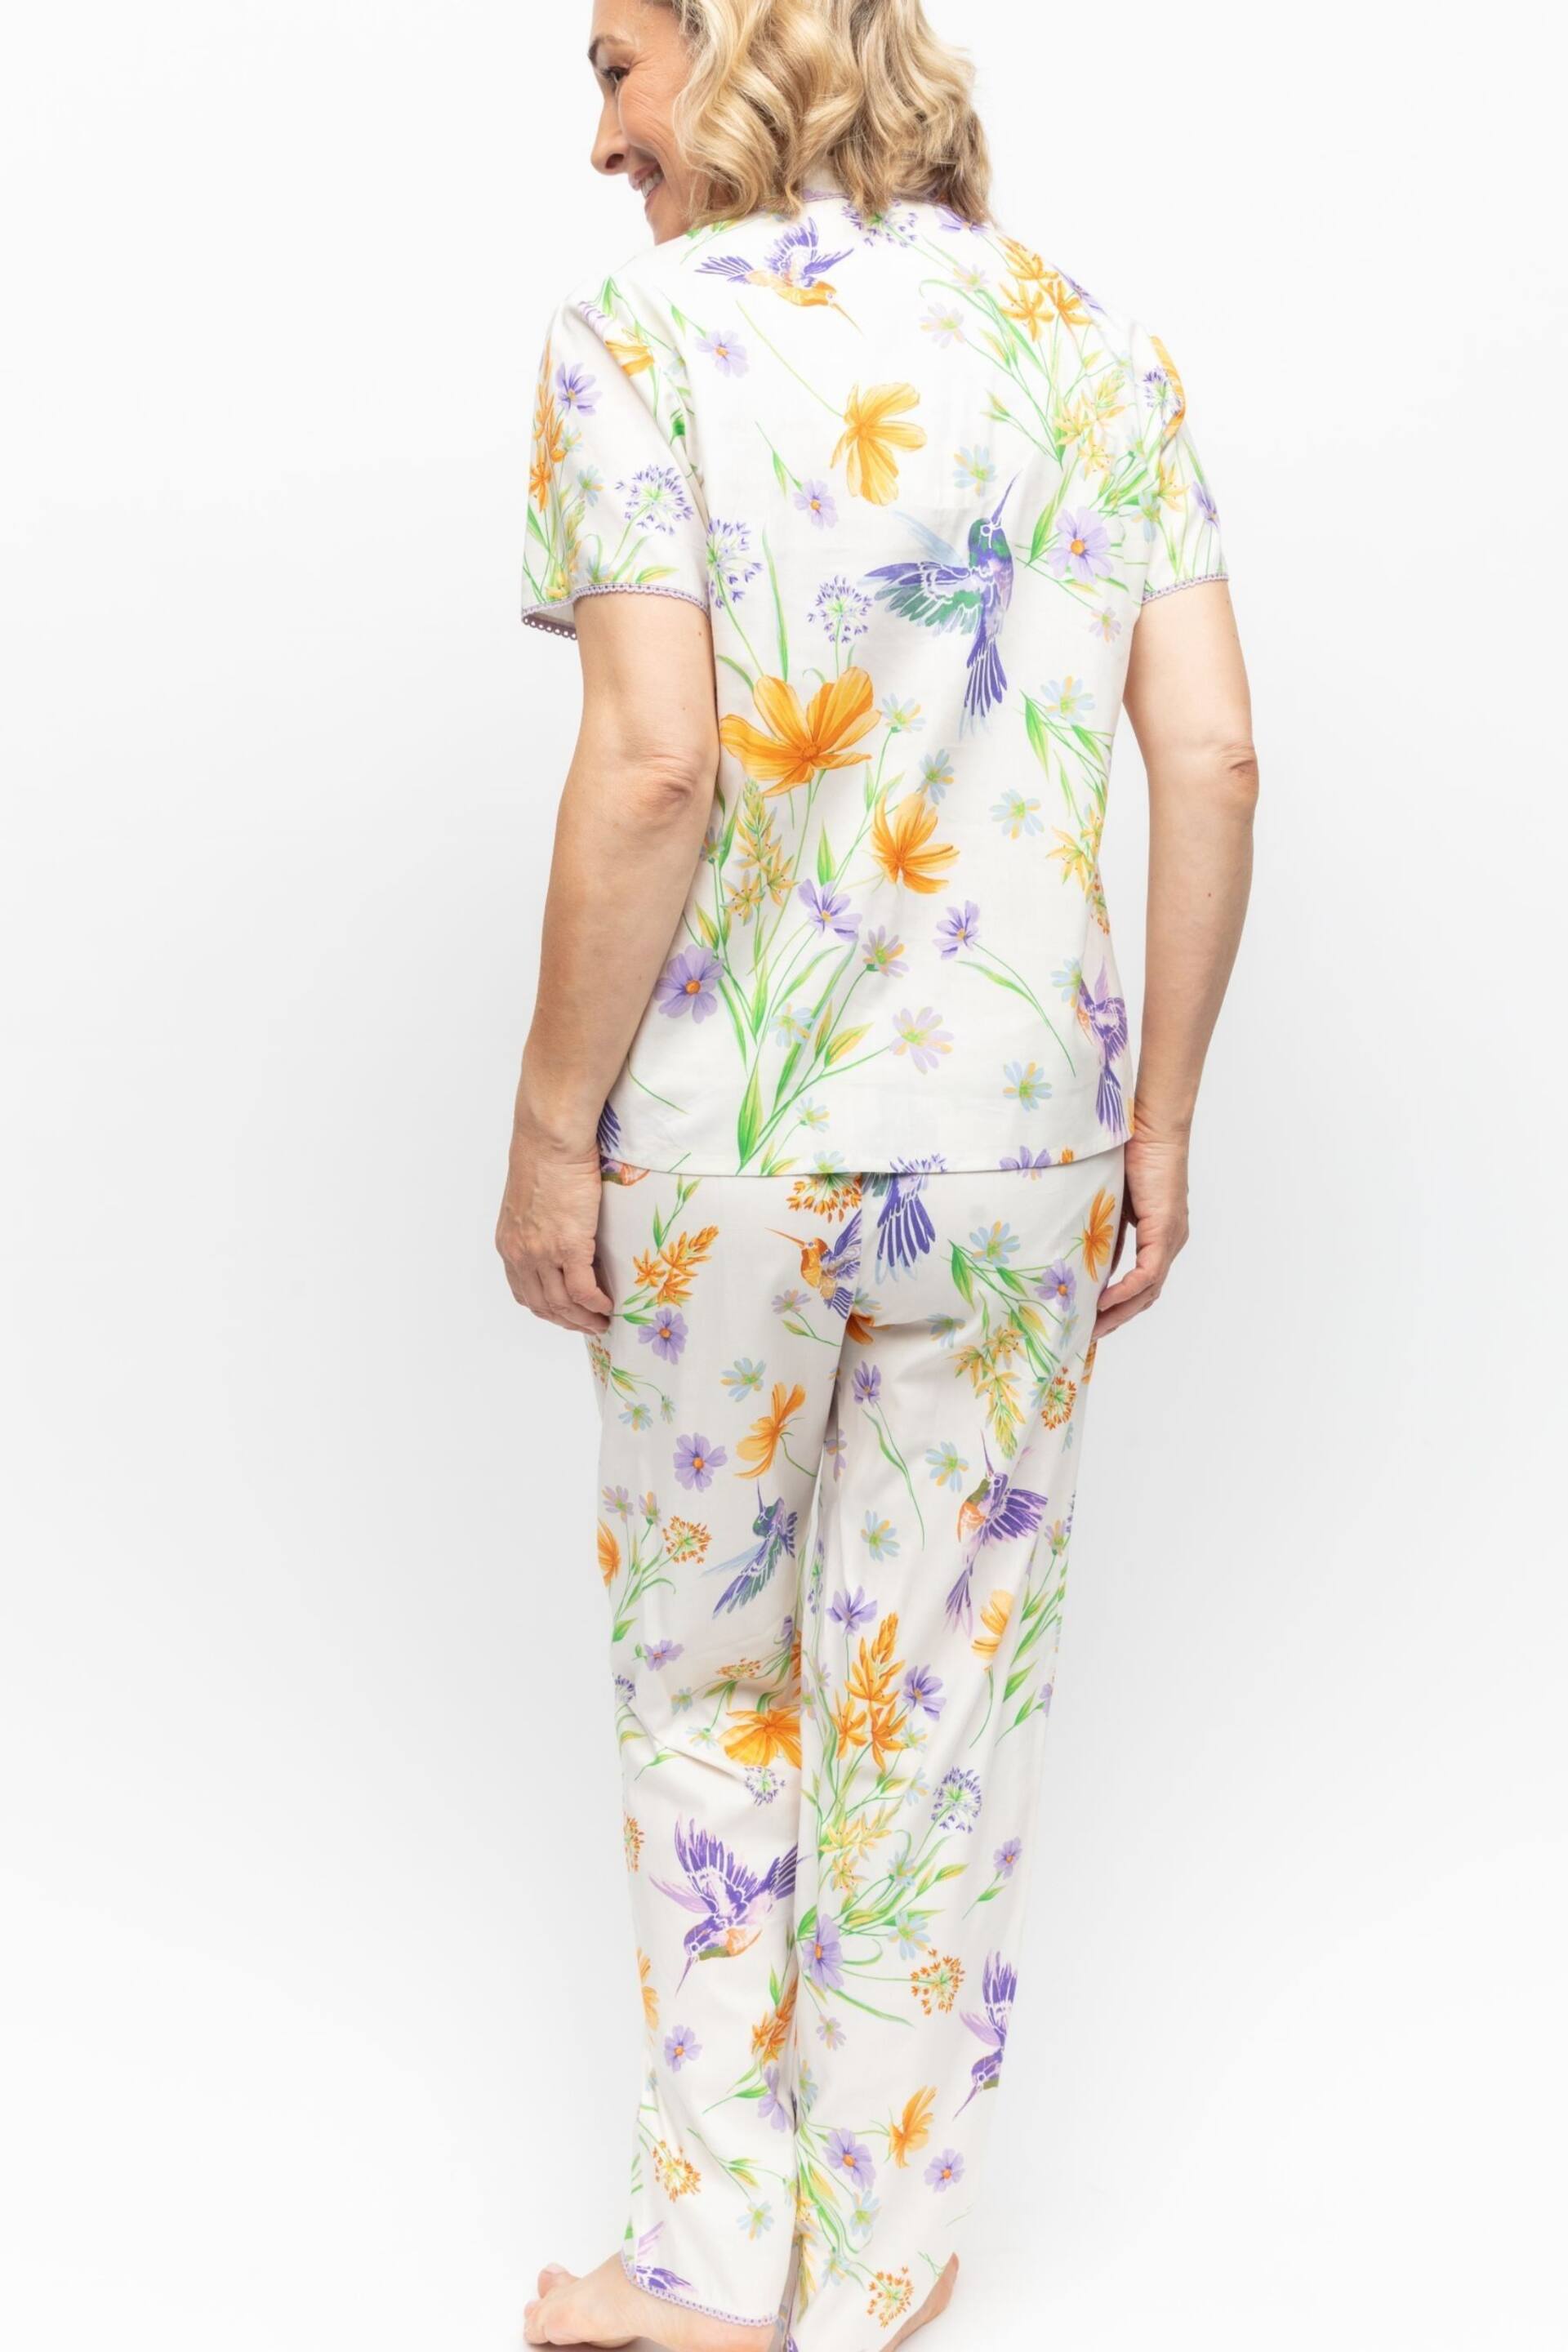 Nora Rose Cream Shell Print Pyjamas Set - Image 2 of 4